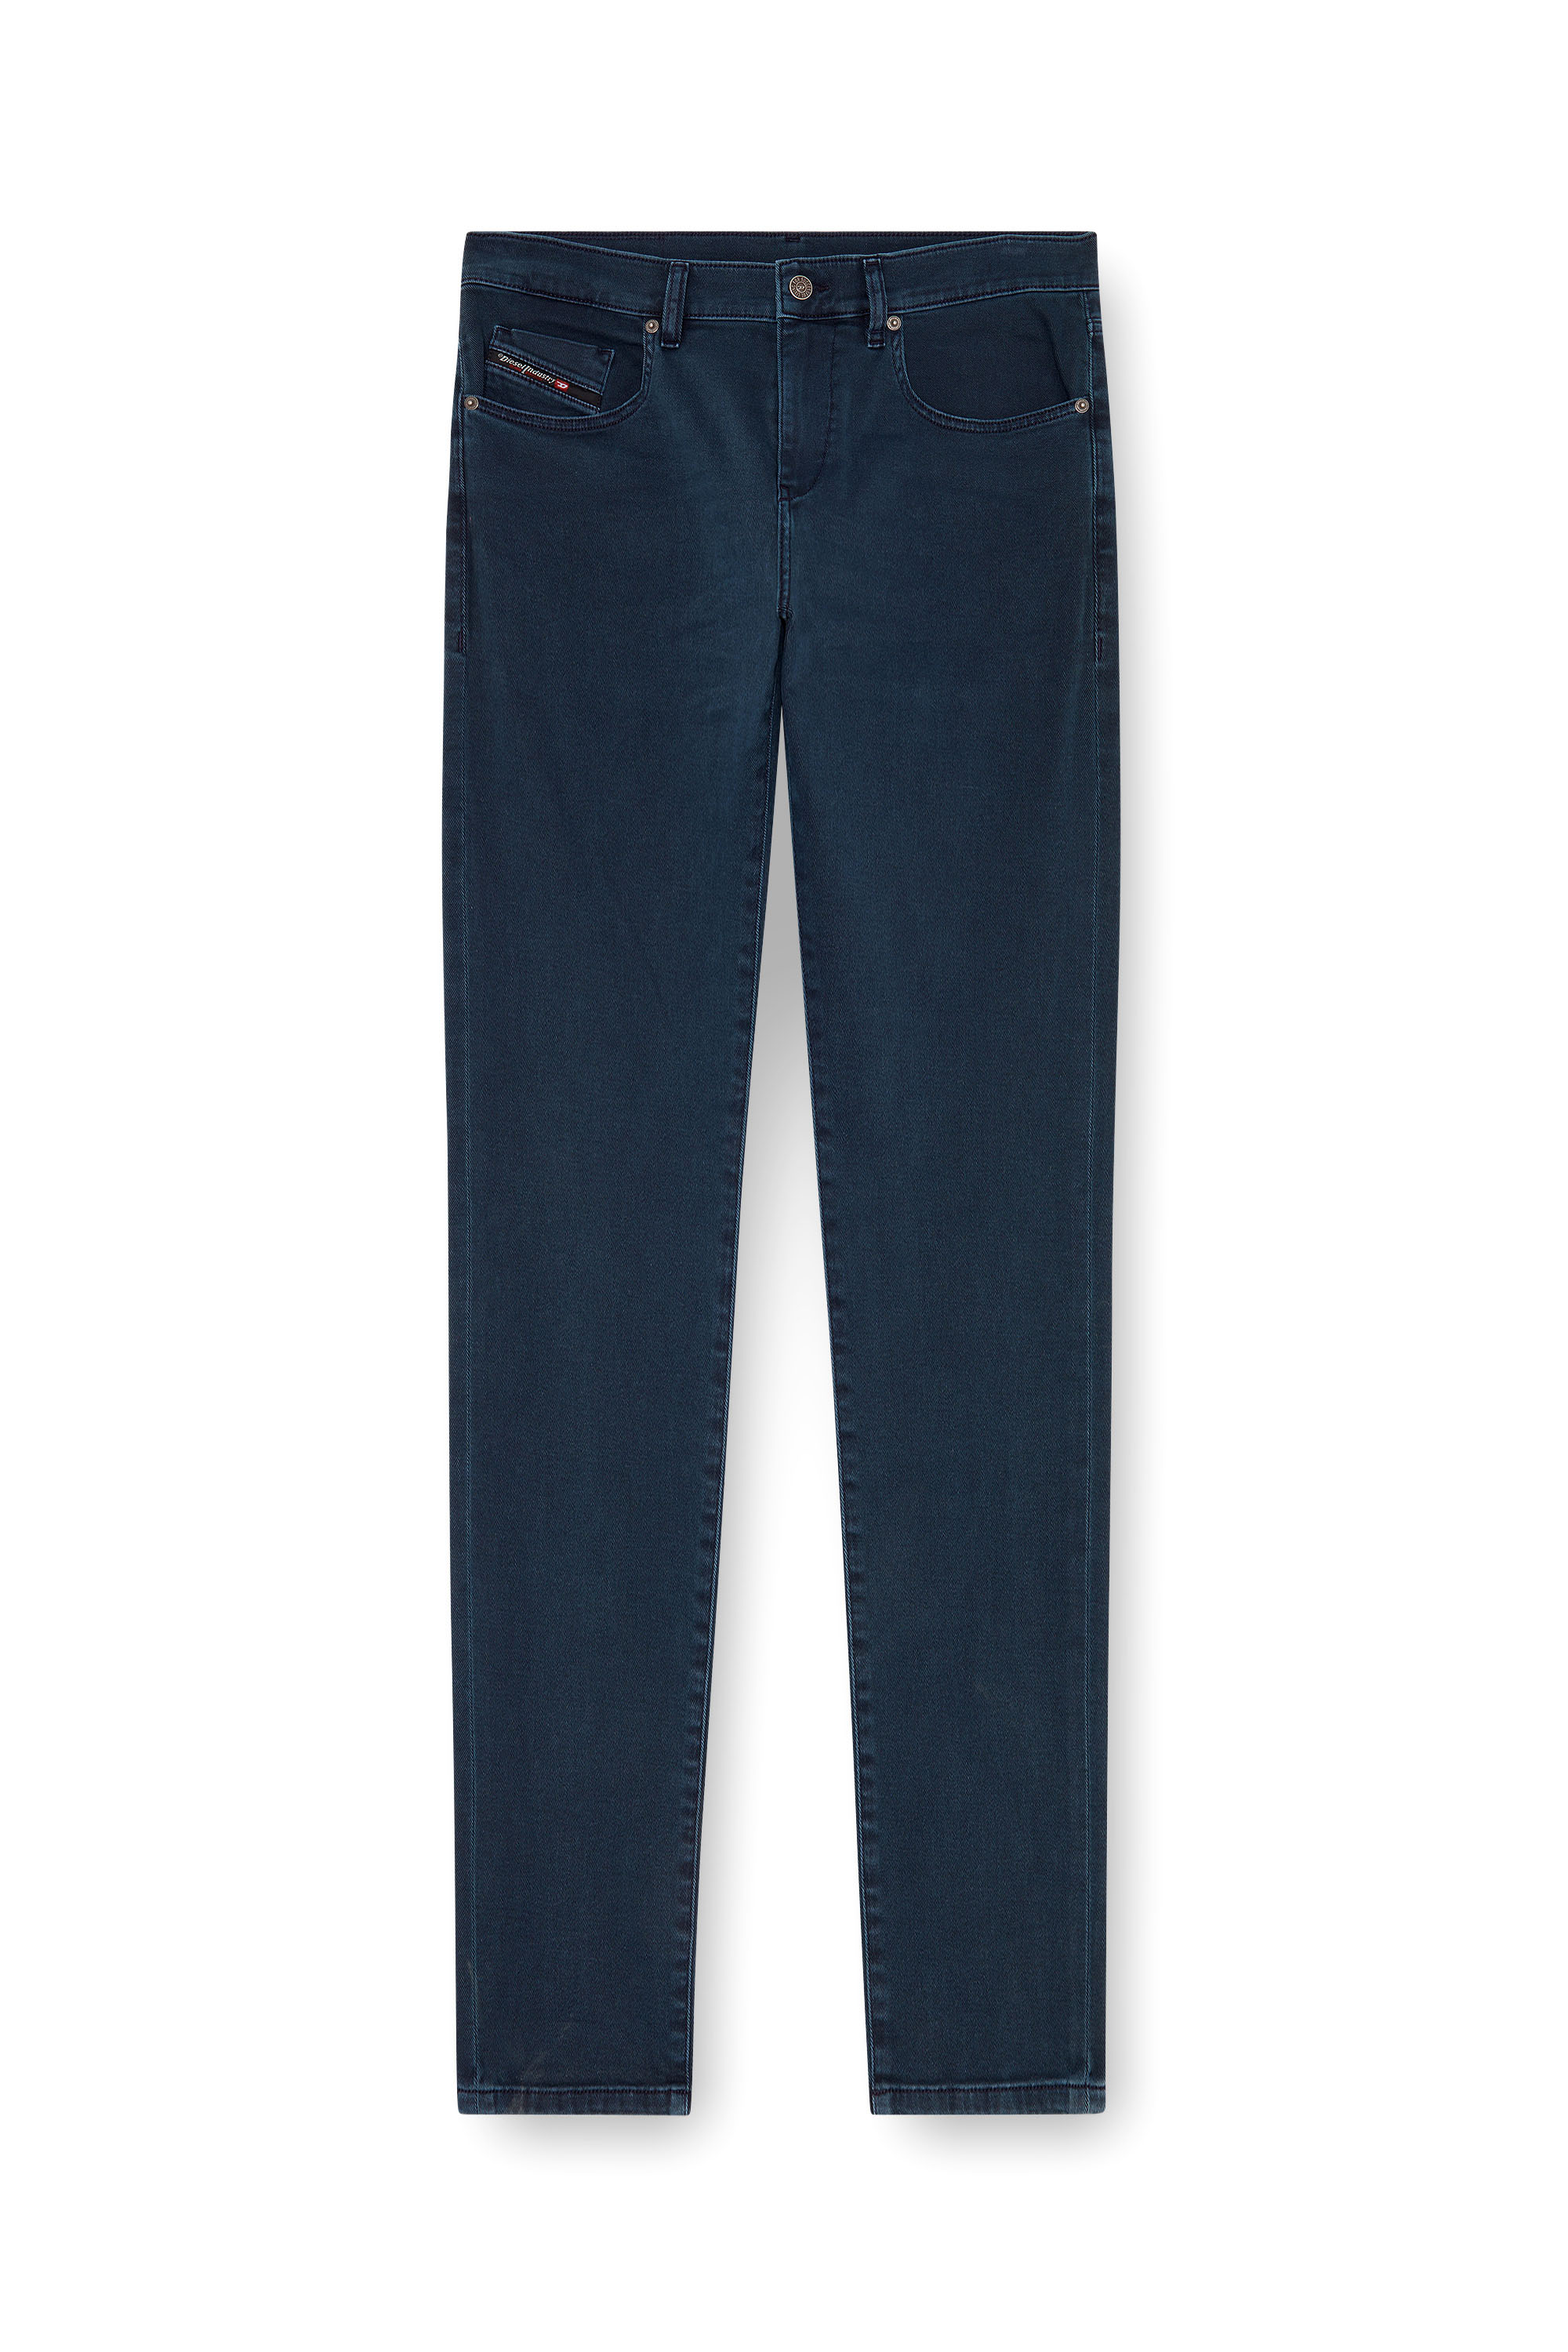 Diesel - Slim Jeans 2019 D-Strukt 0QWTY, Hombre Slim Jeans - 2019 D-Strukt in Azul marino - Image 3